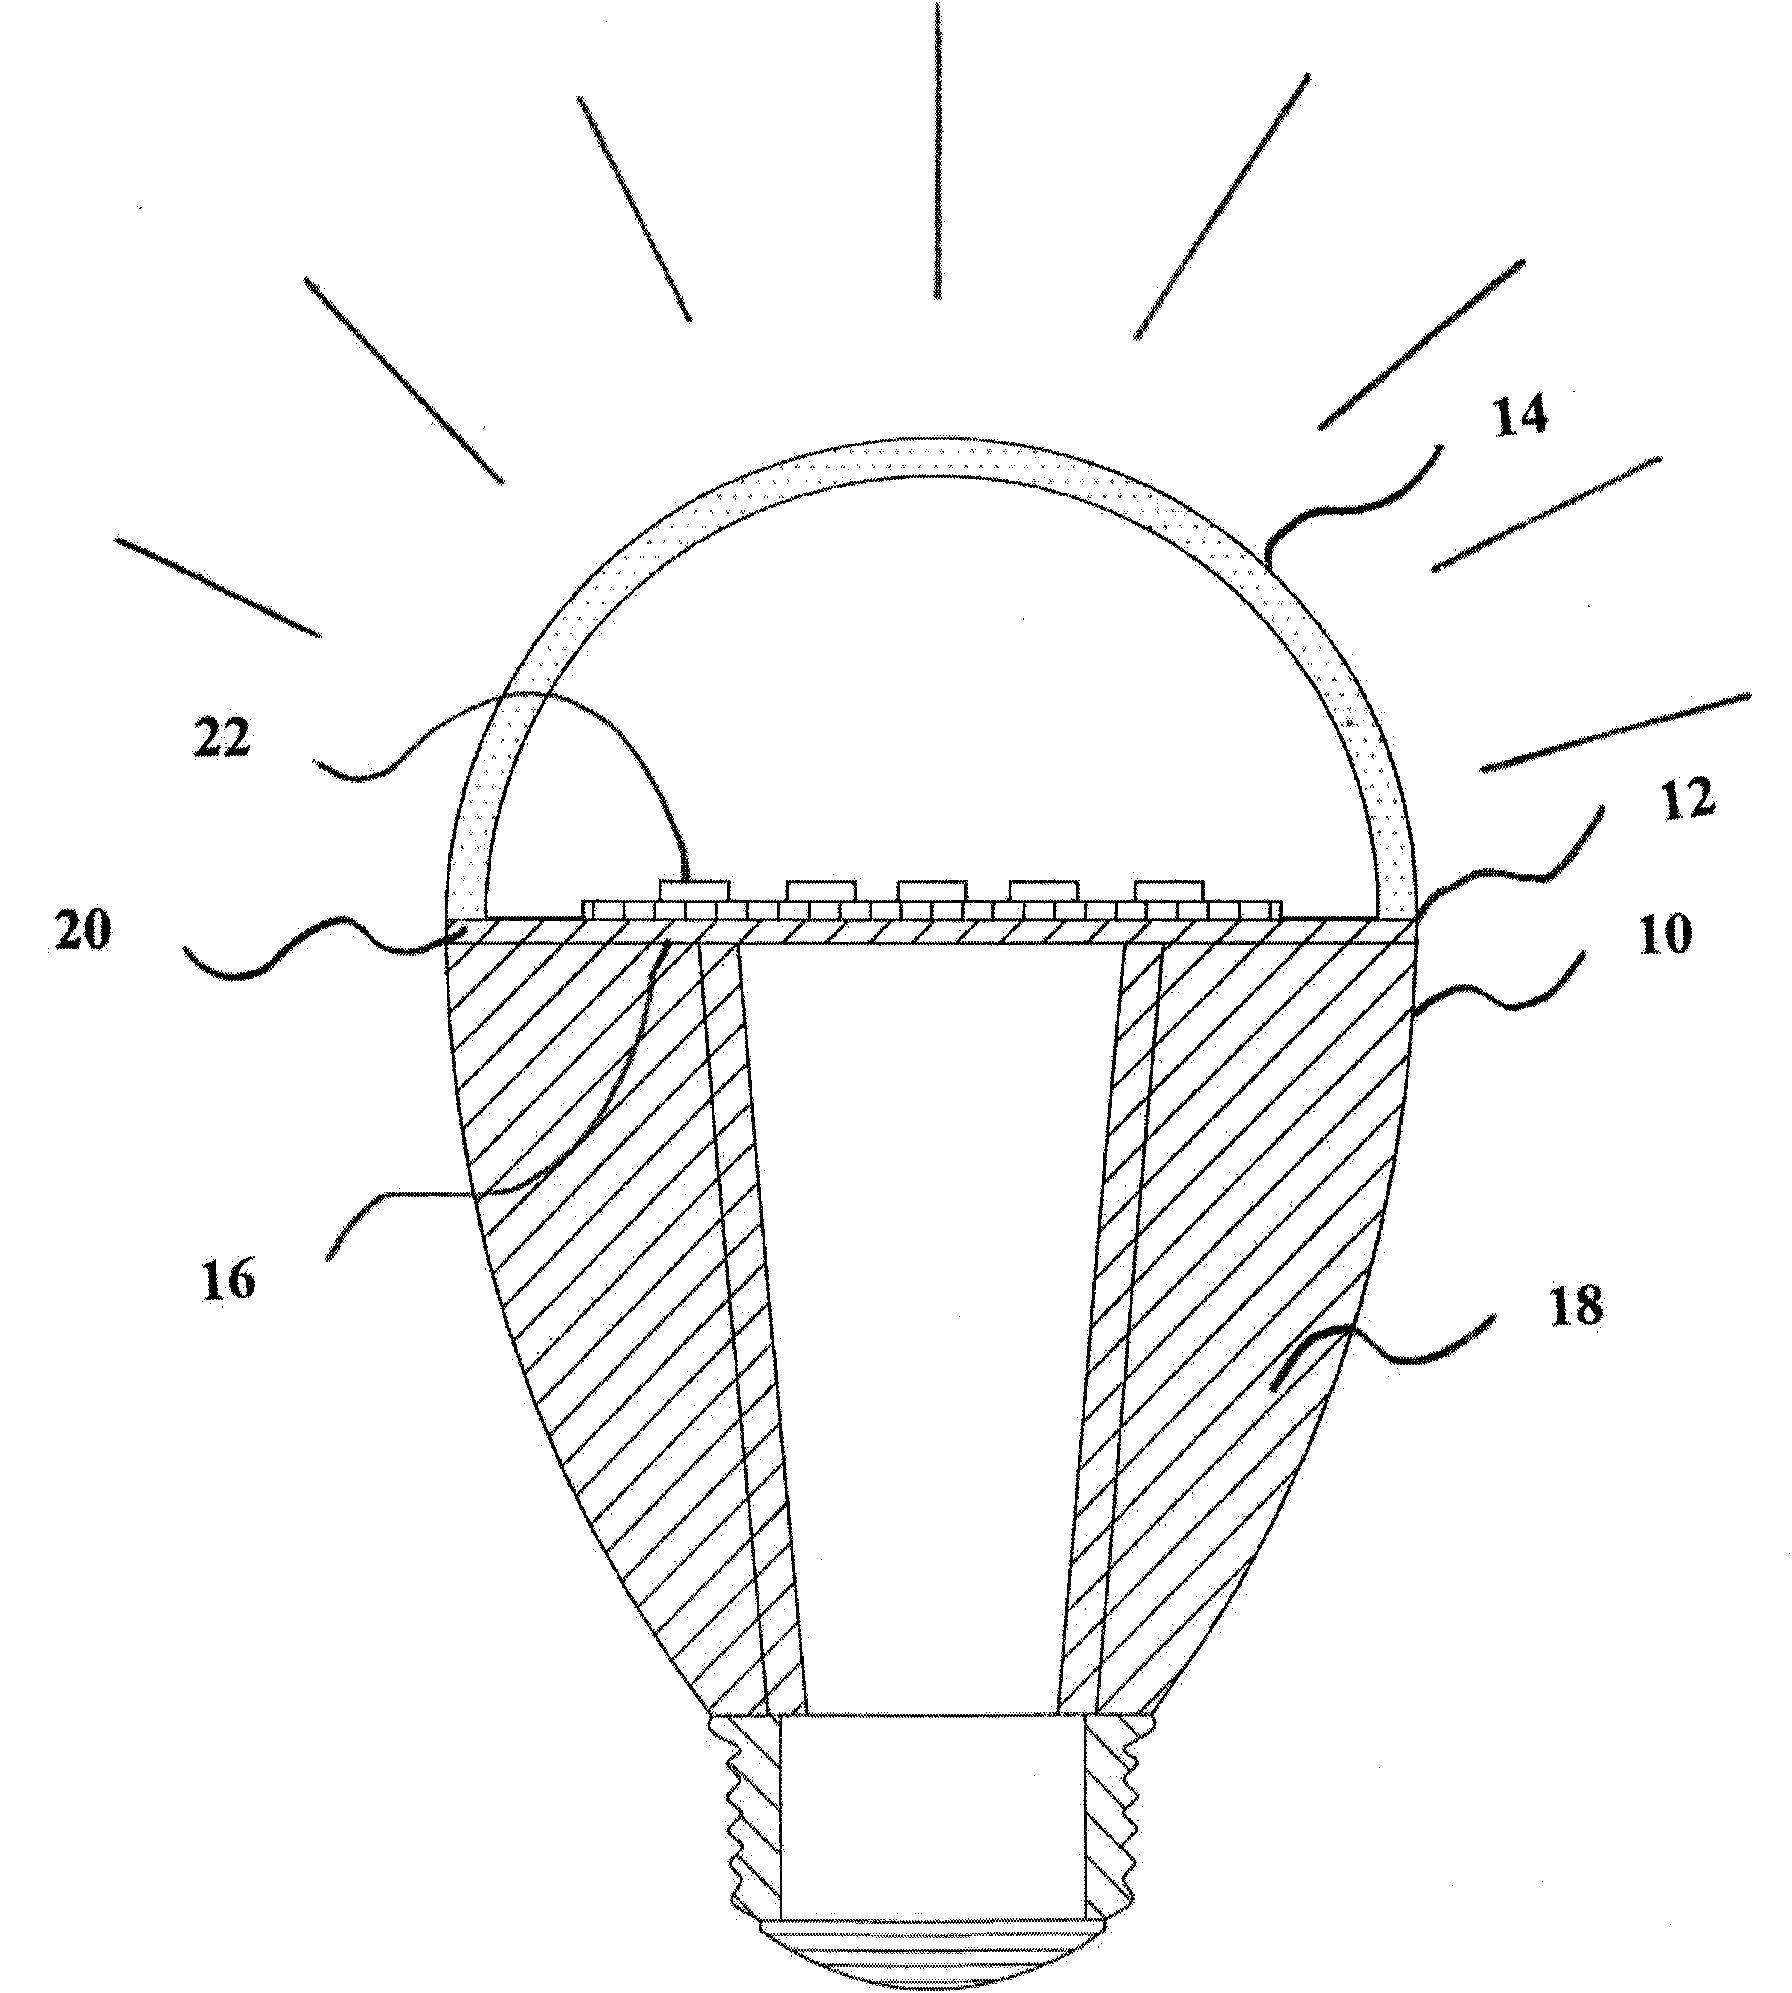 LED (Light Emitting Diode) lamp structure with bigger illumination angle